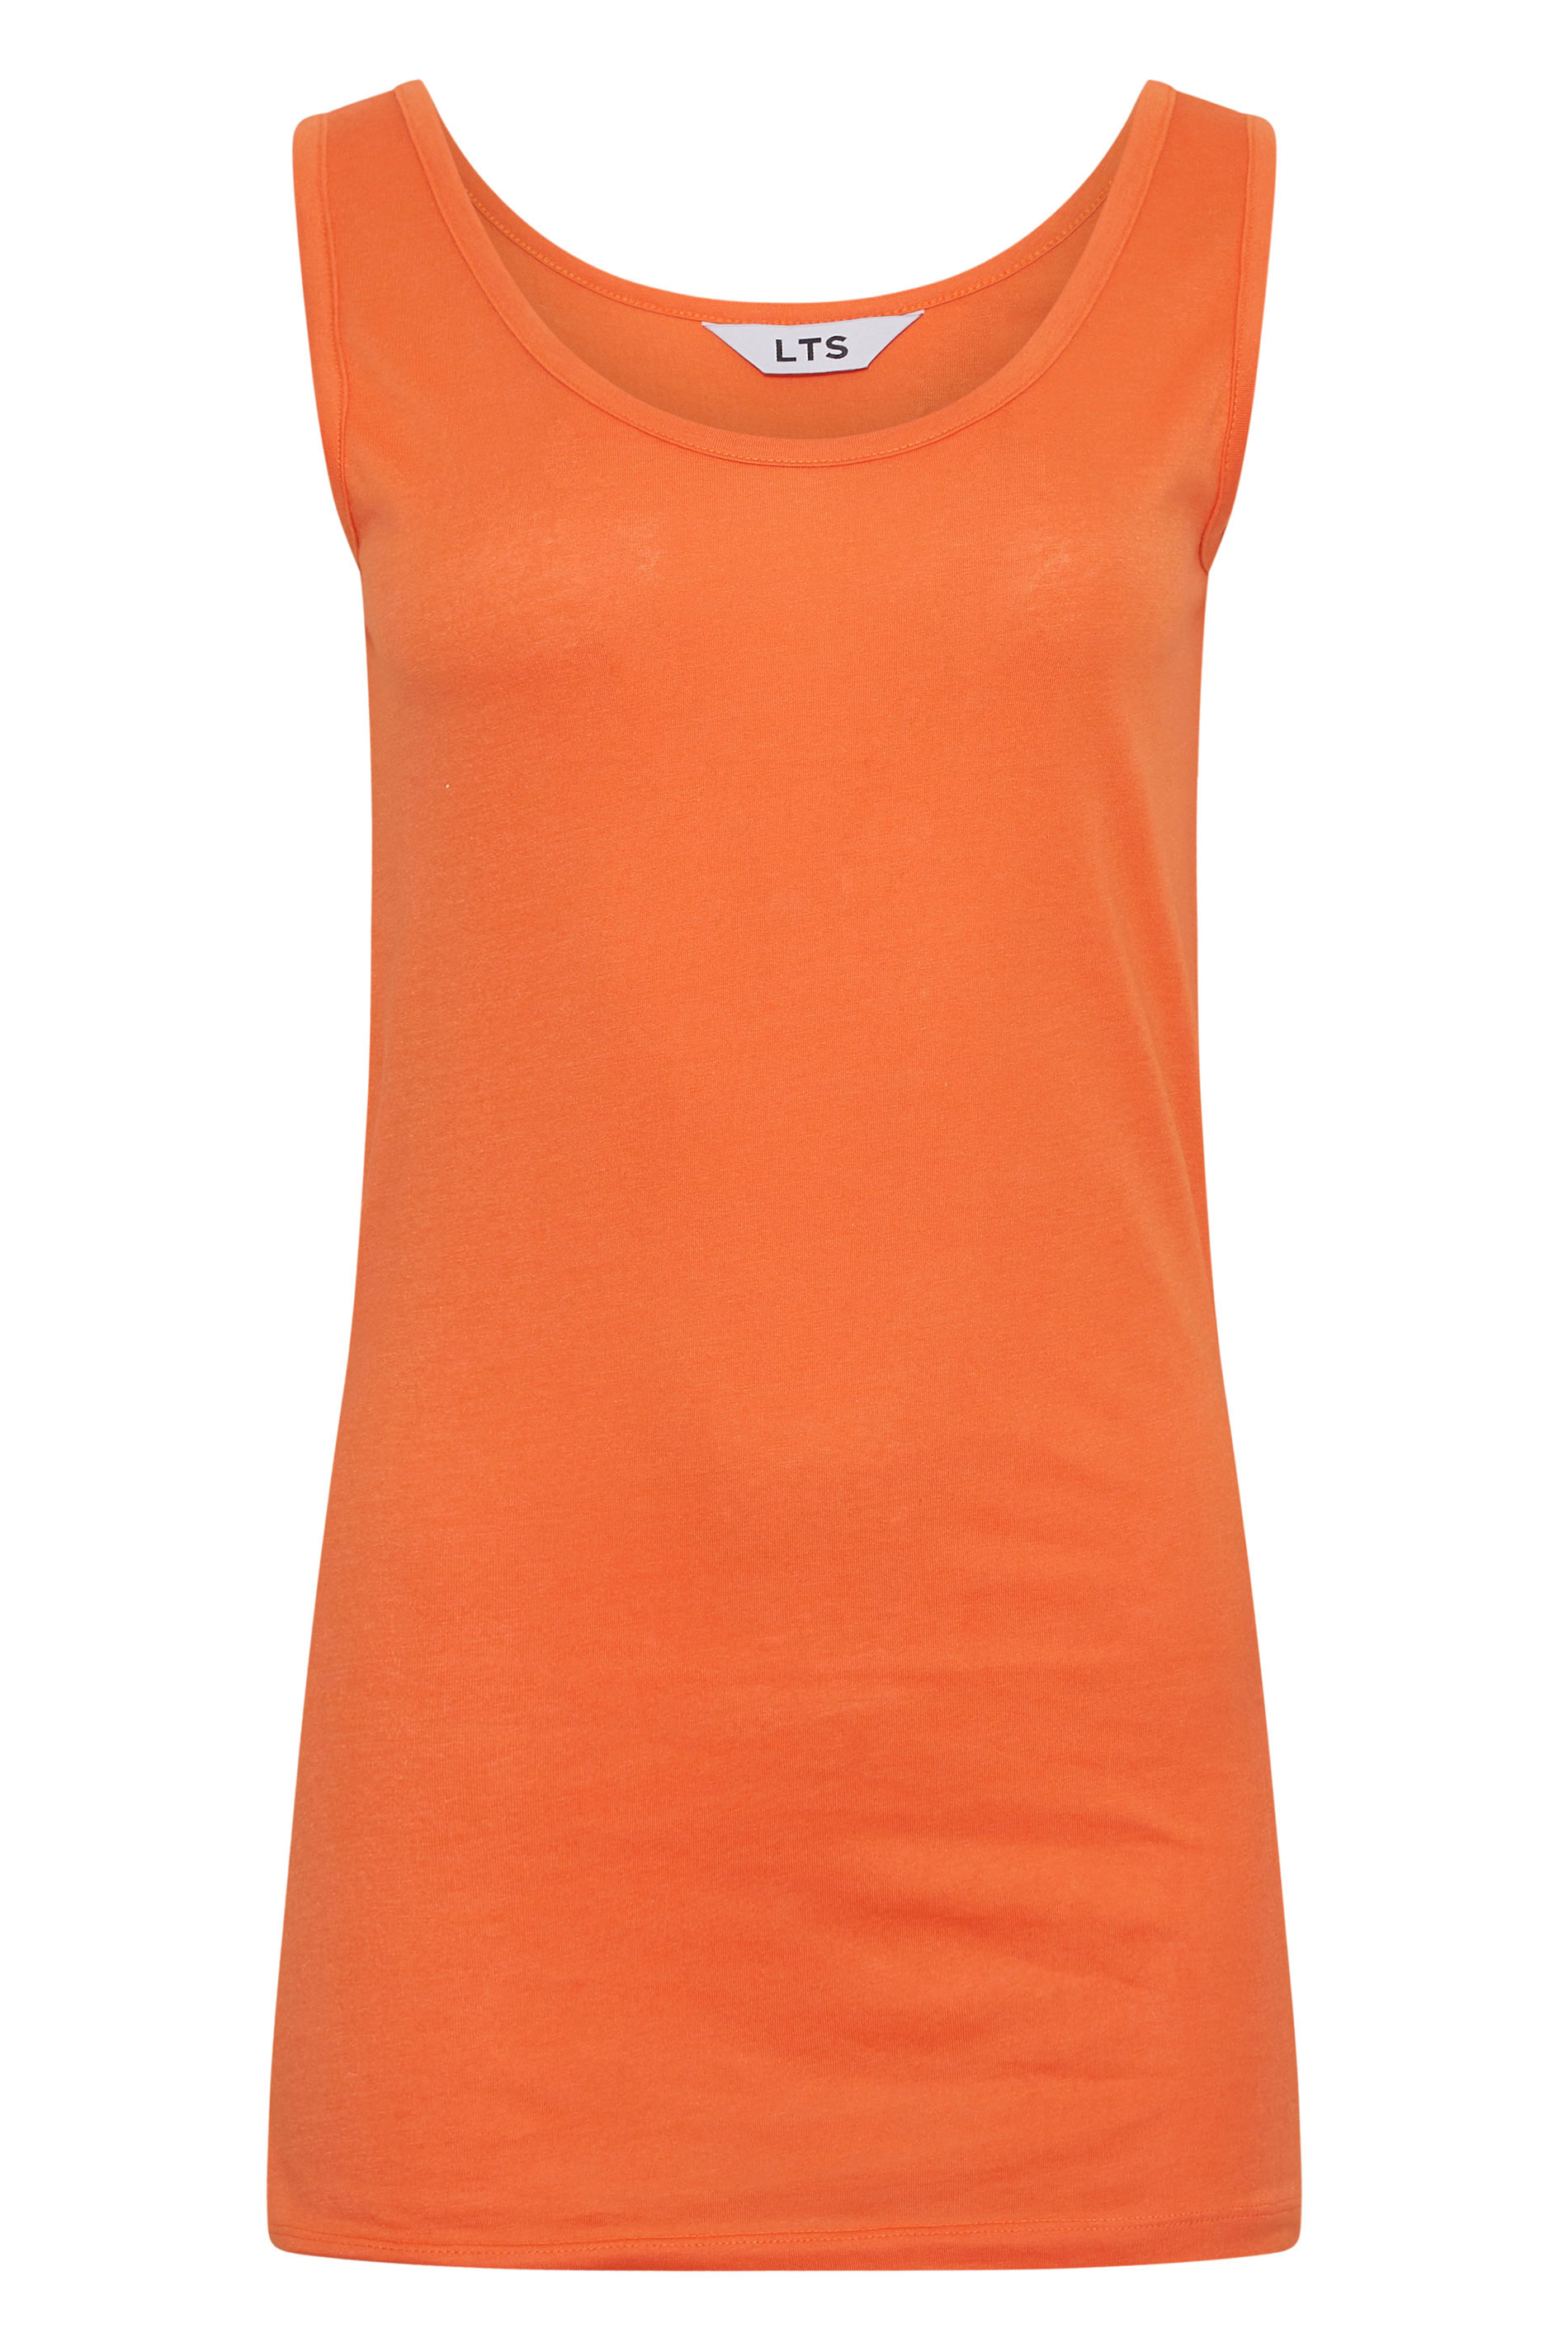 LTS Tall Women's Orange Vest Top | Long Tall Sally